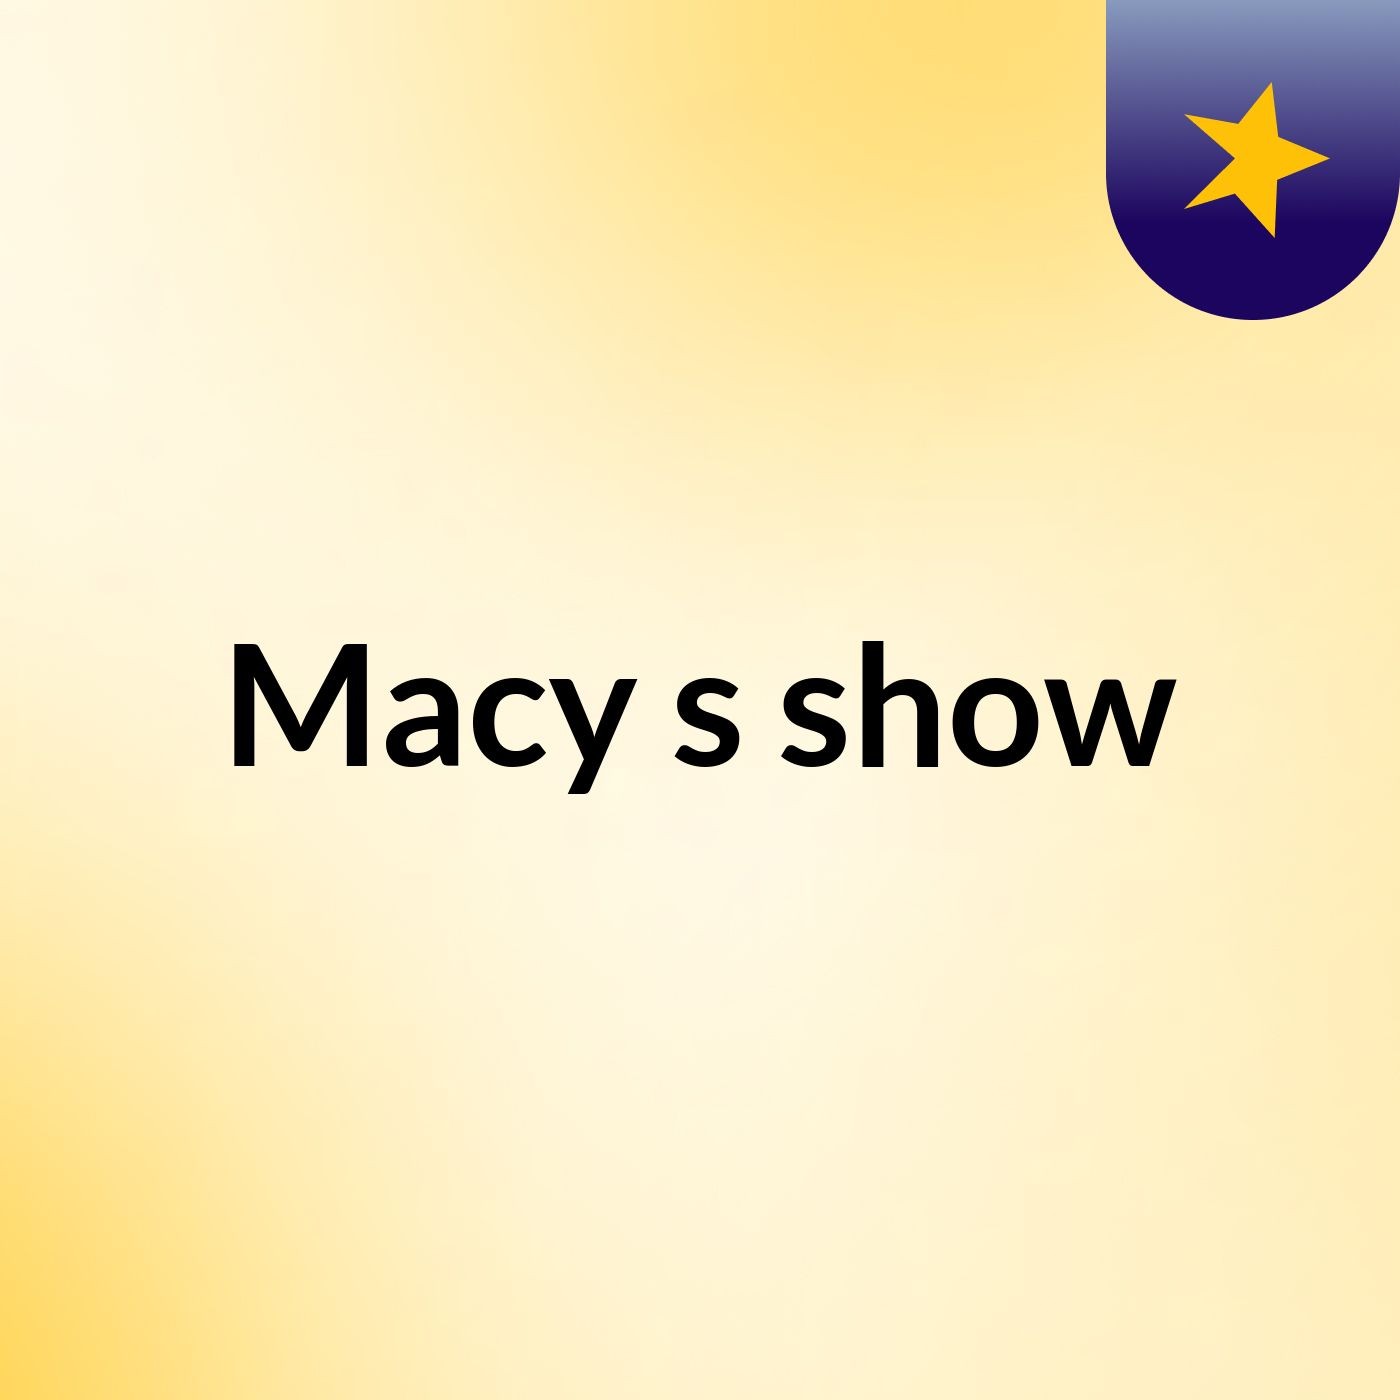 Macy's show